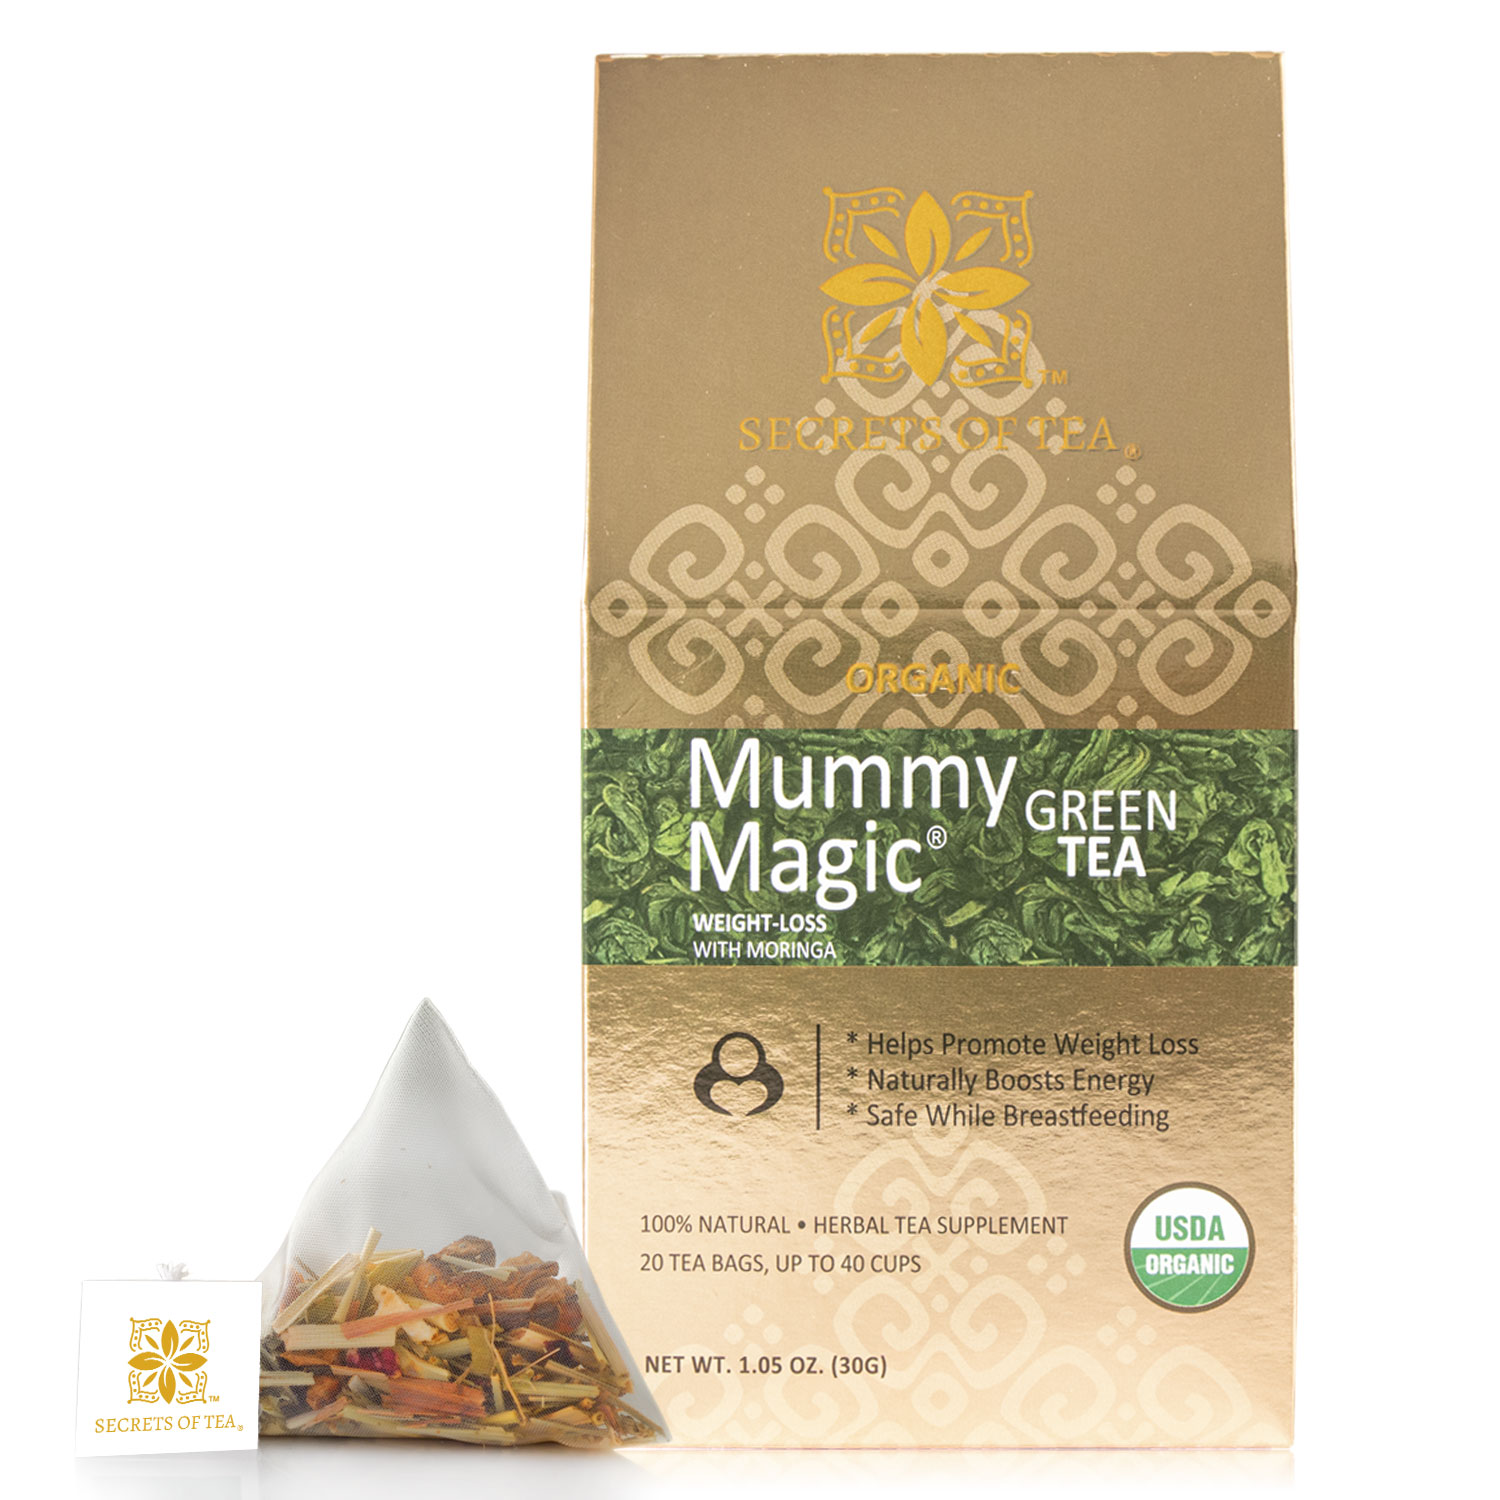 Secrets of Tea Mummy Magic Weight-Loss Green Tea 2 innerpacks per case 2.0 oz